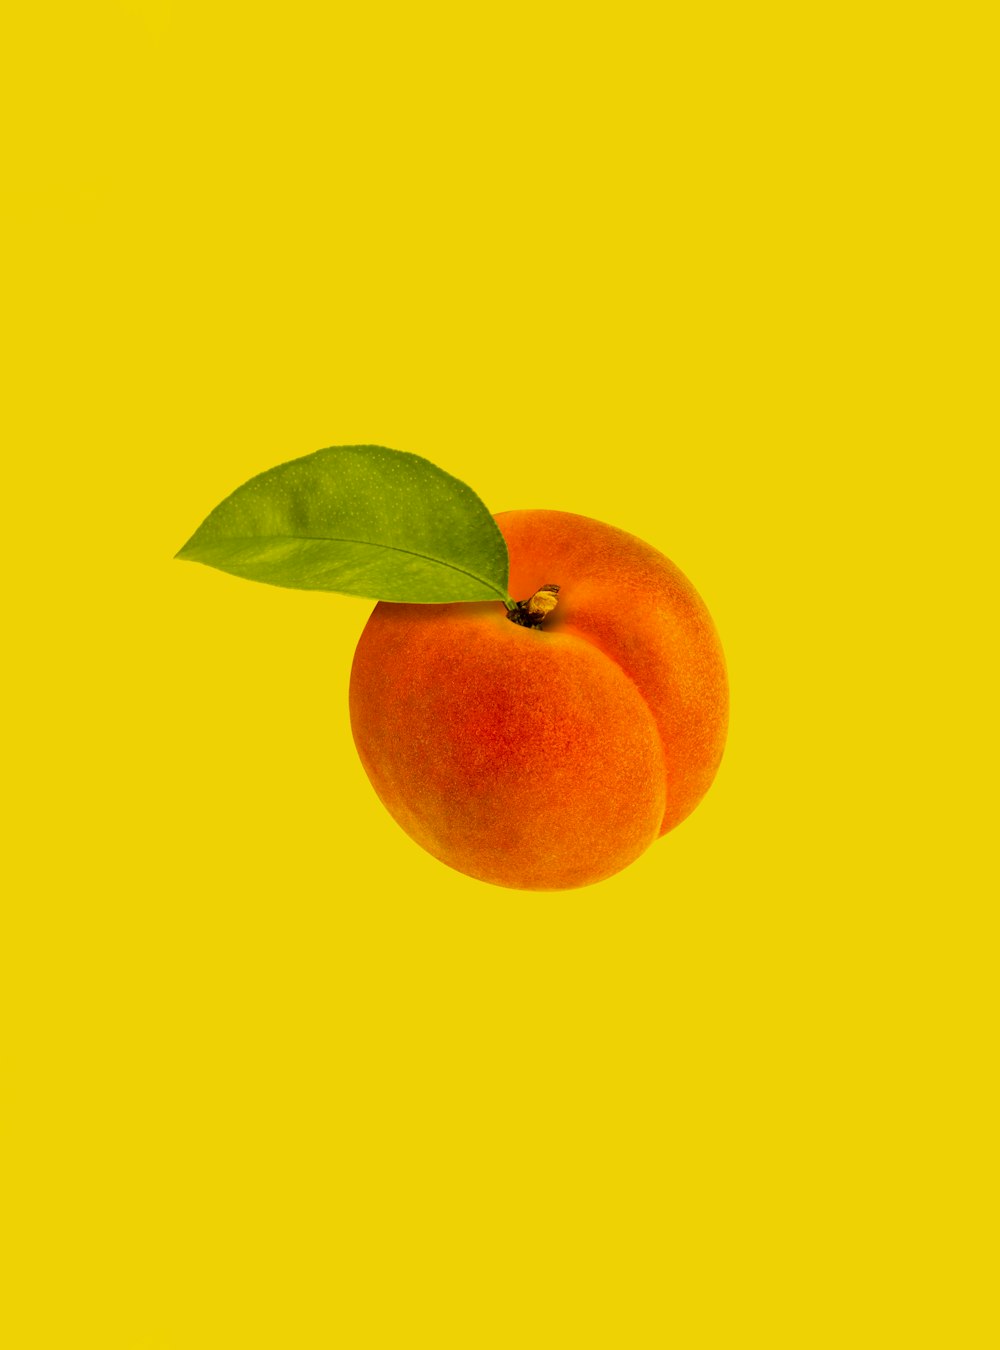 Fruit orange à feuilles vertes